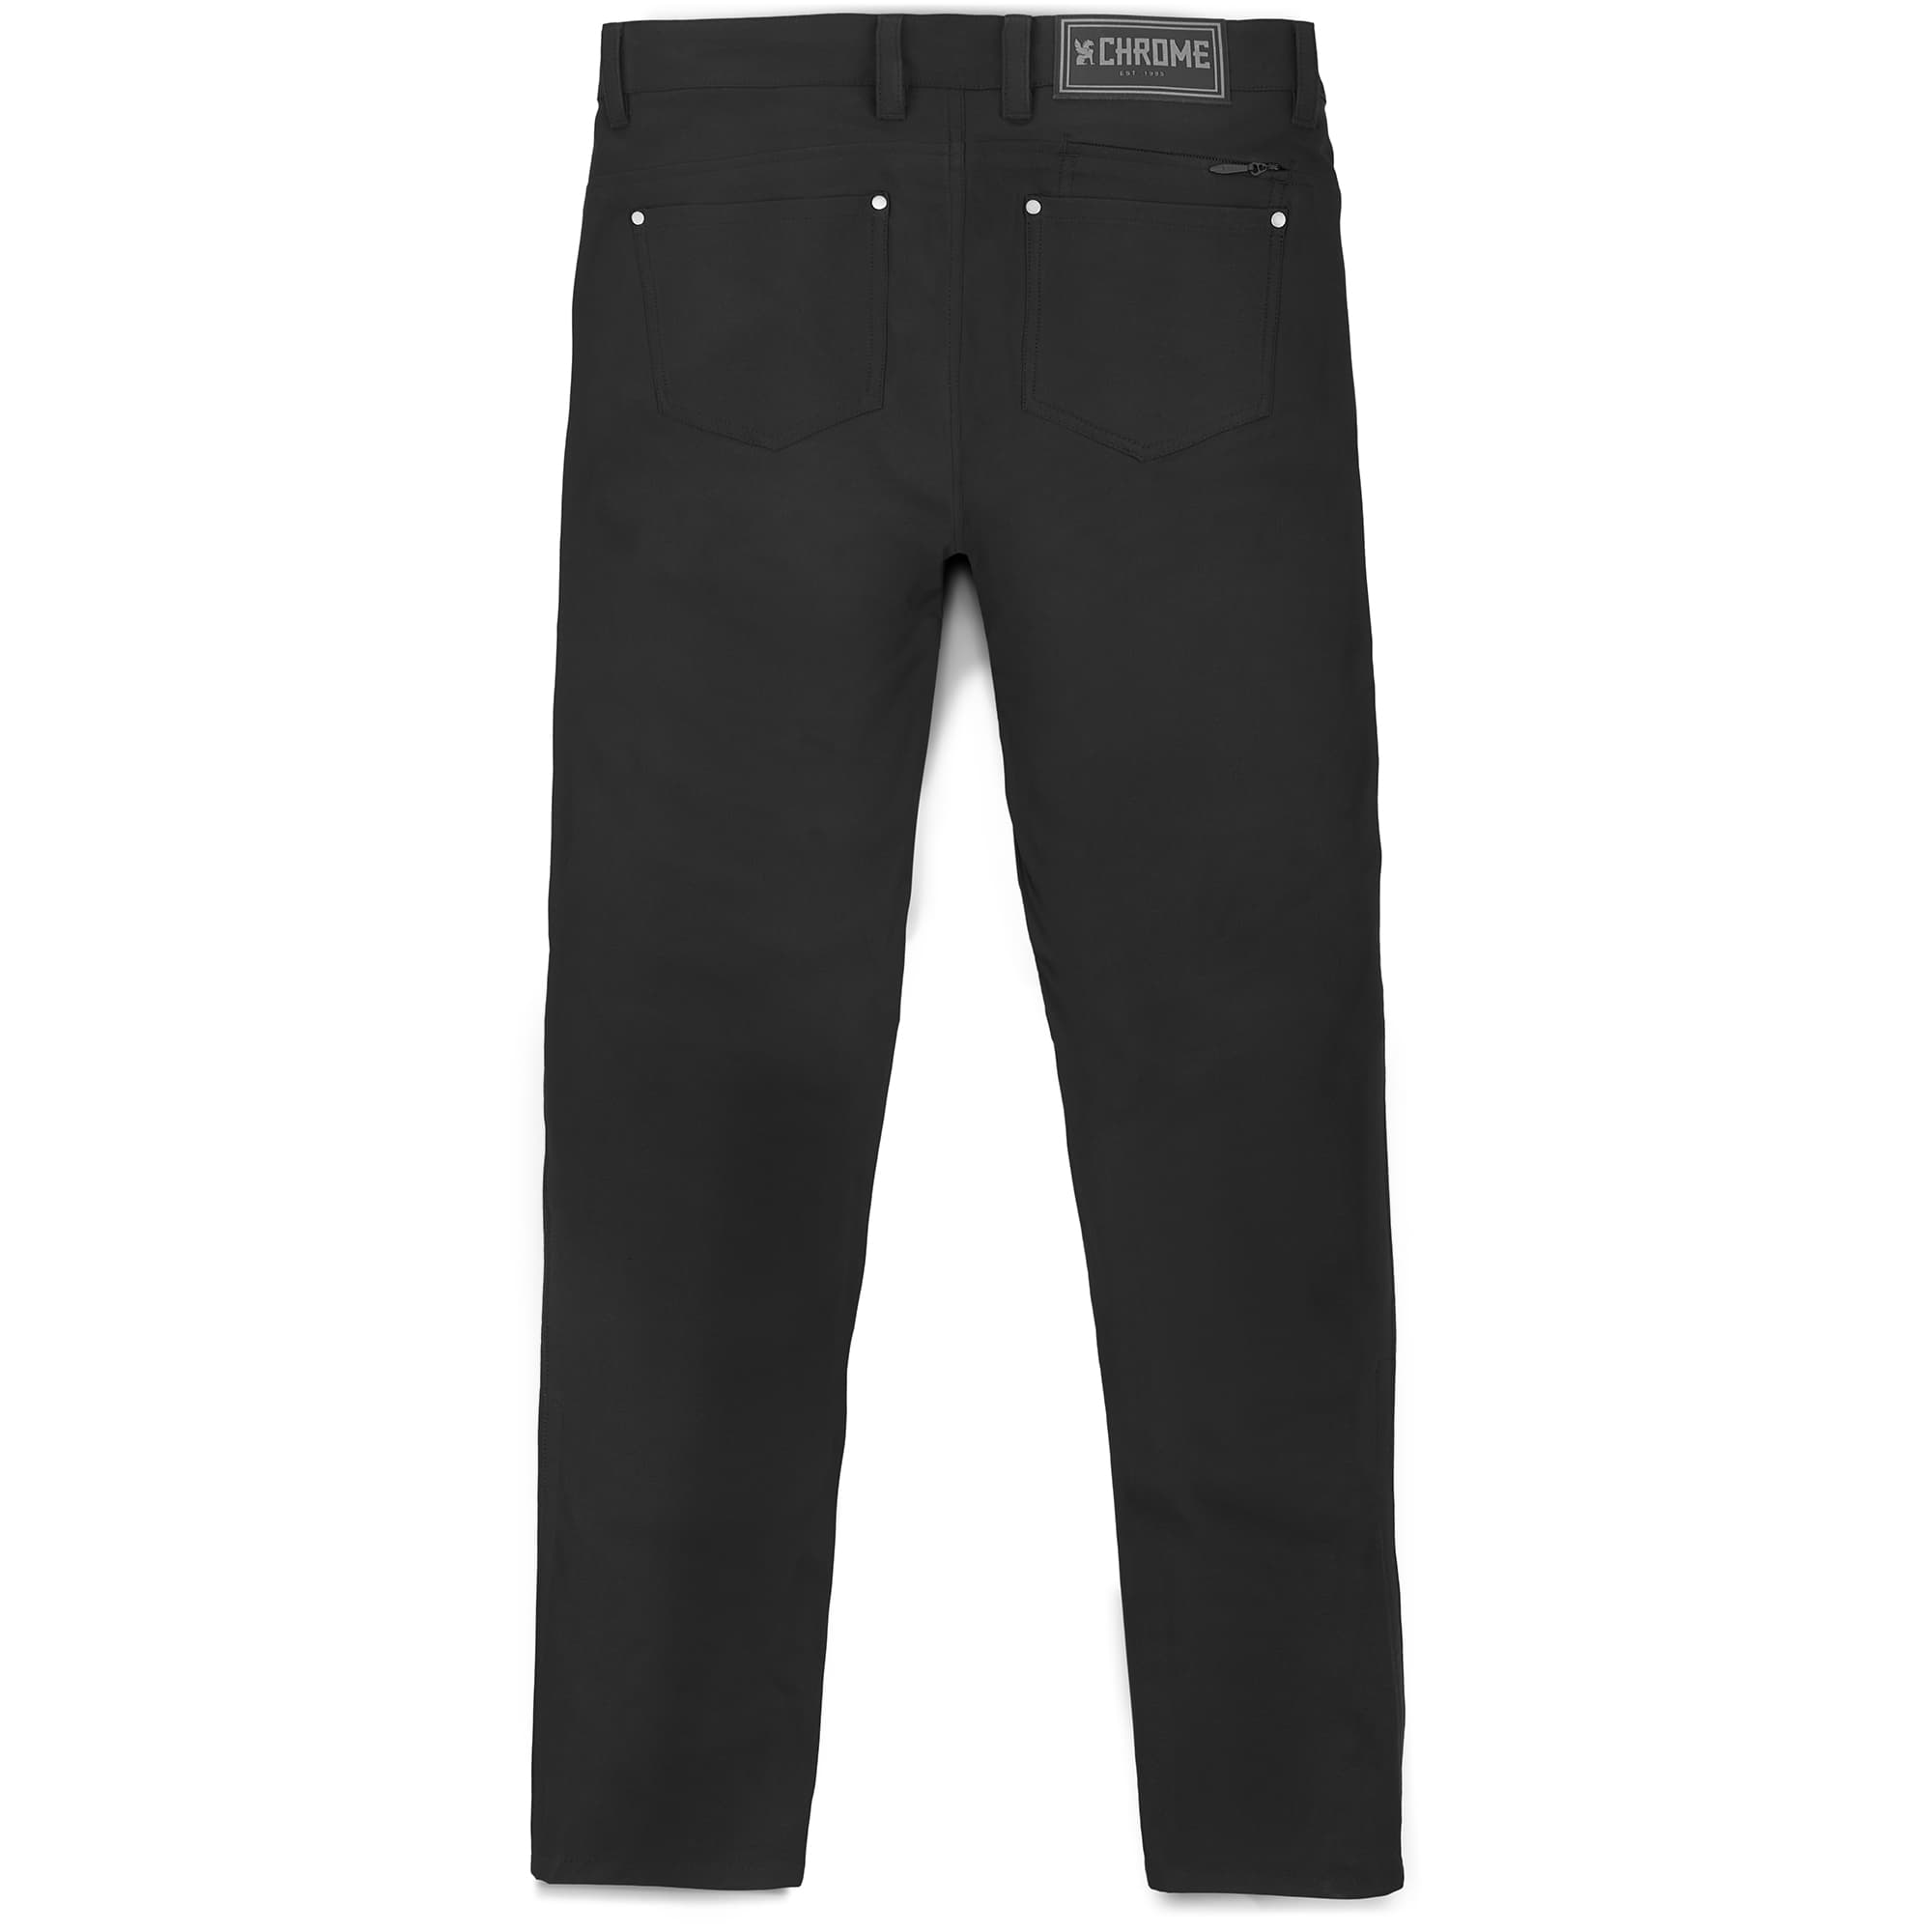 Women's 5 pocket pant in black back view